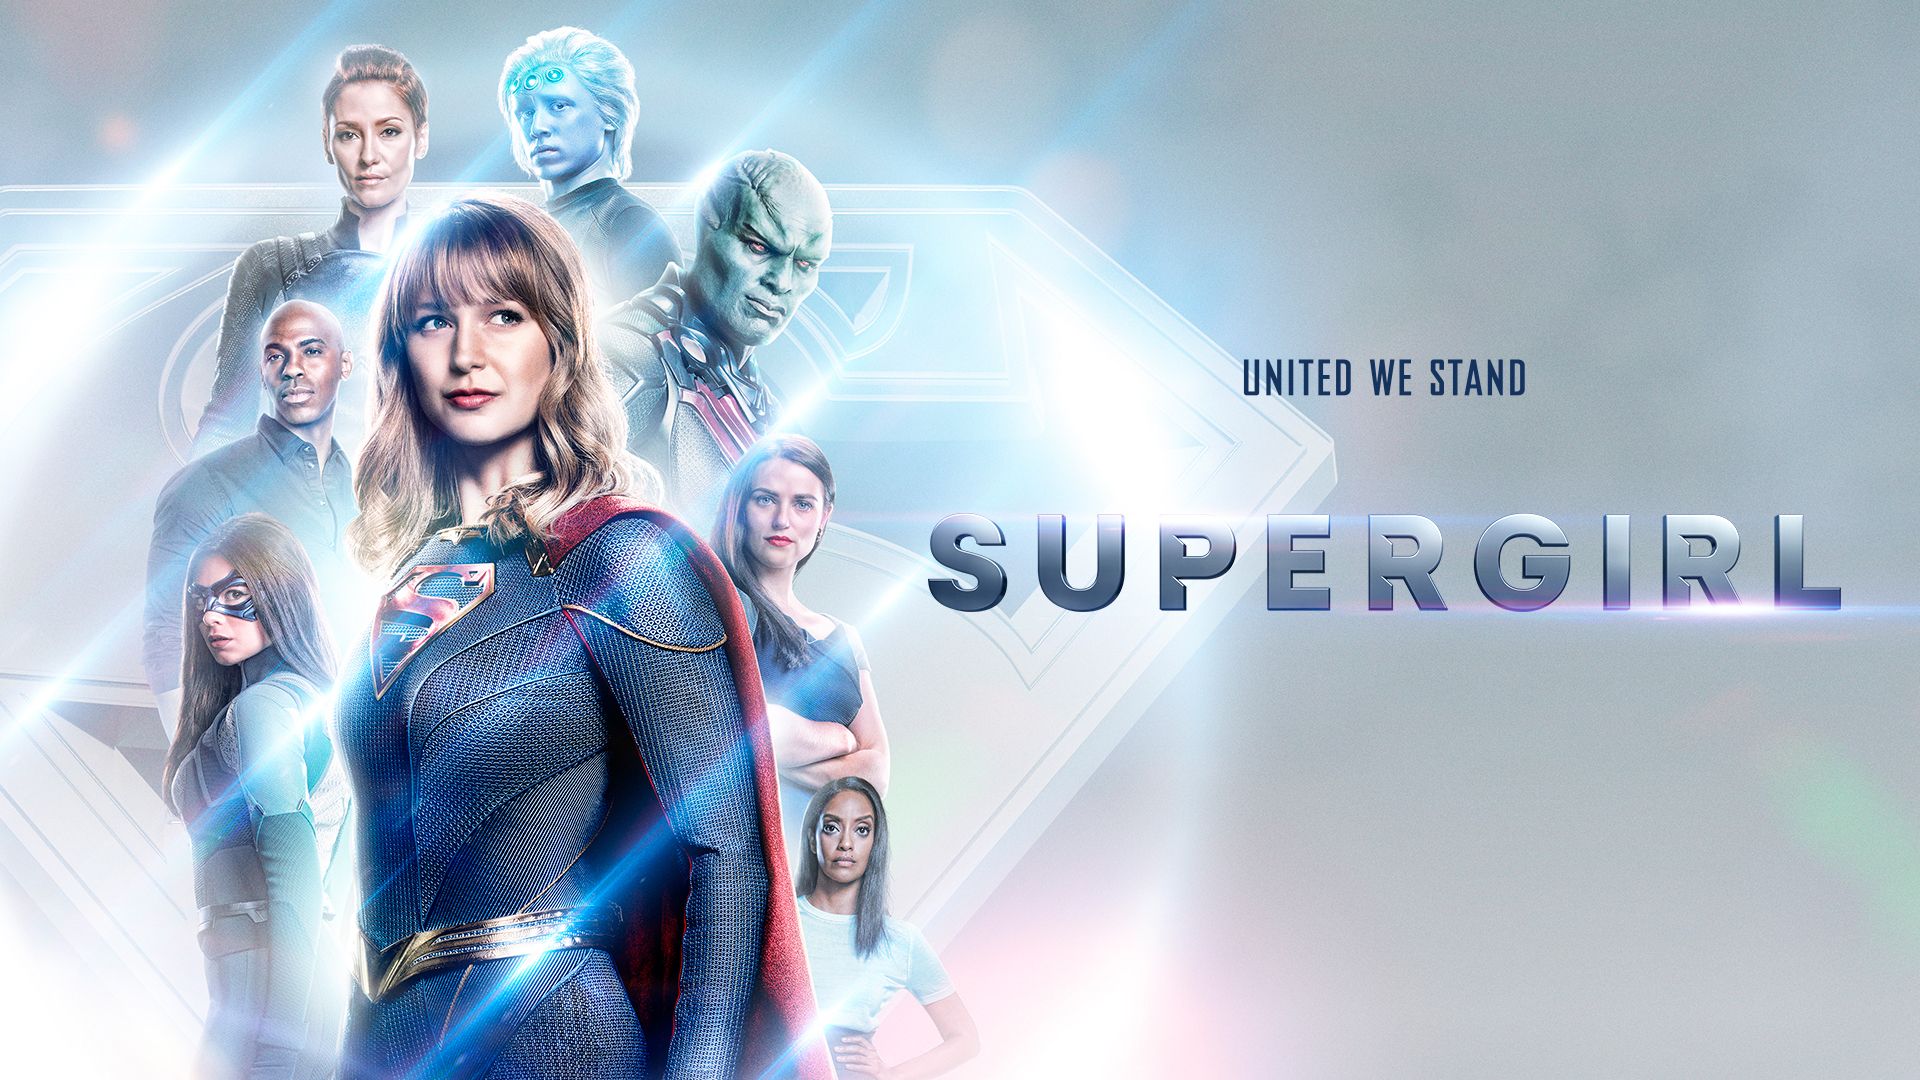 Supergirl Season 5 Wallpaper, HD TV Series 4K Wallpaper, Image, Photo and Background